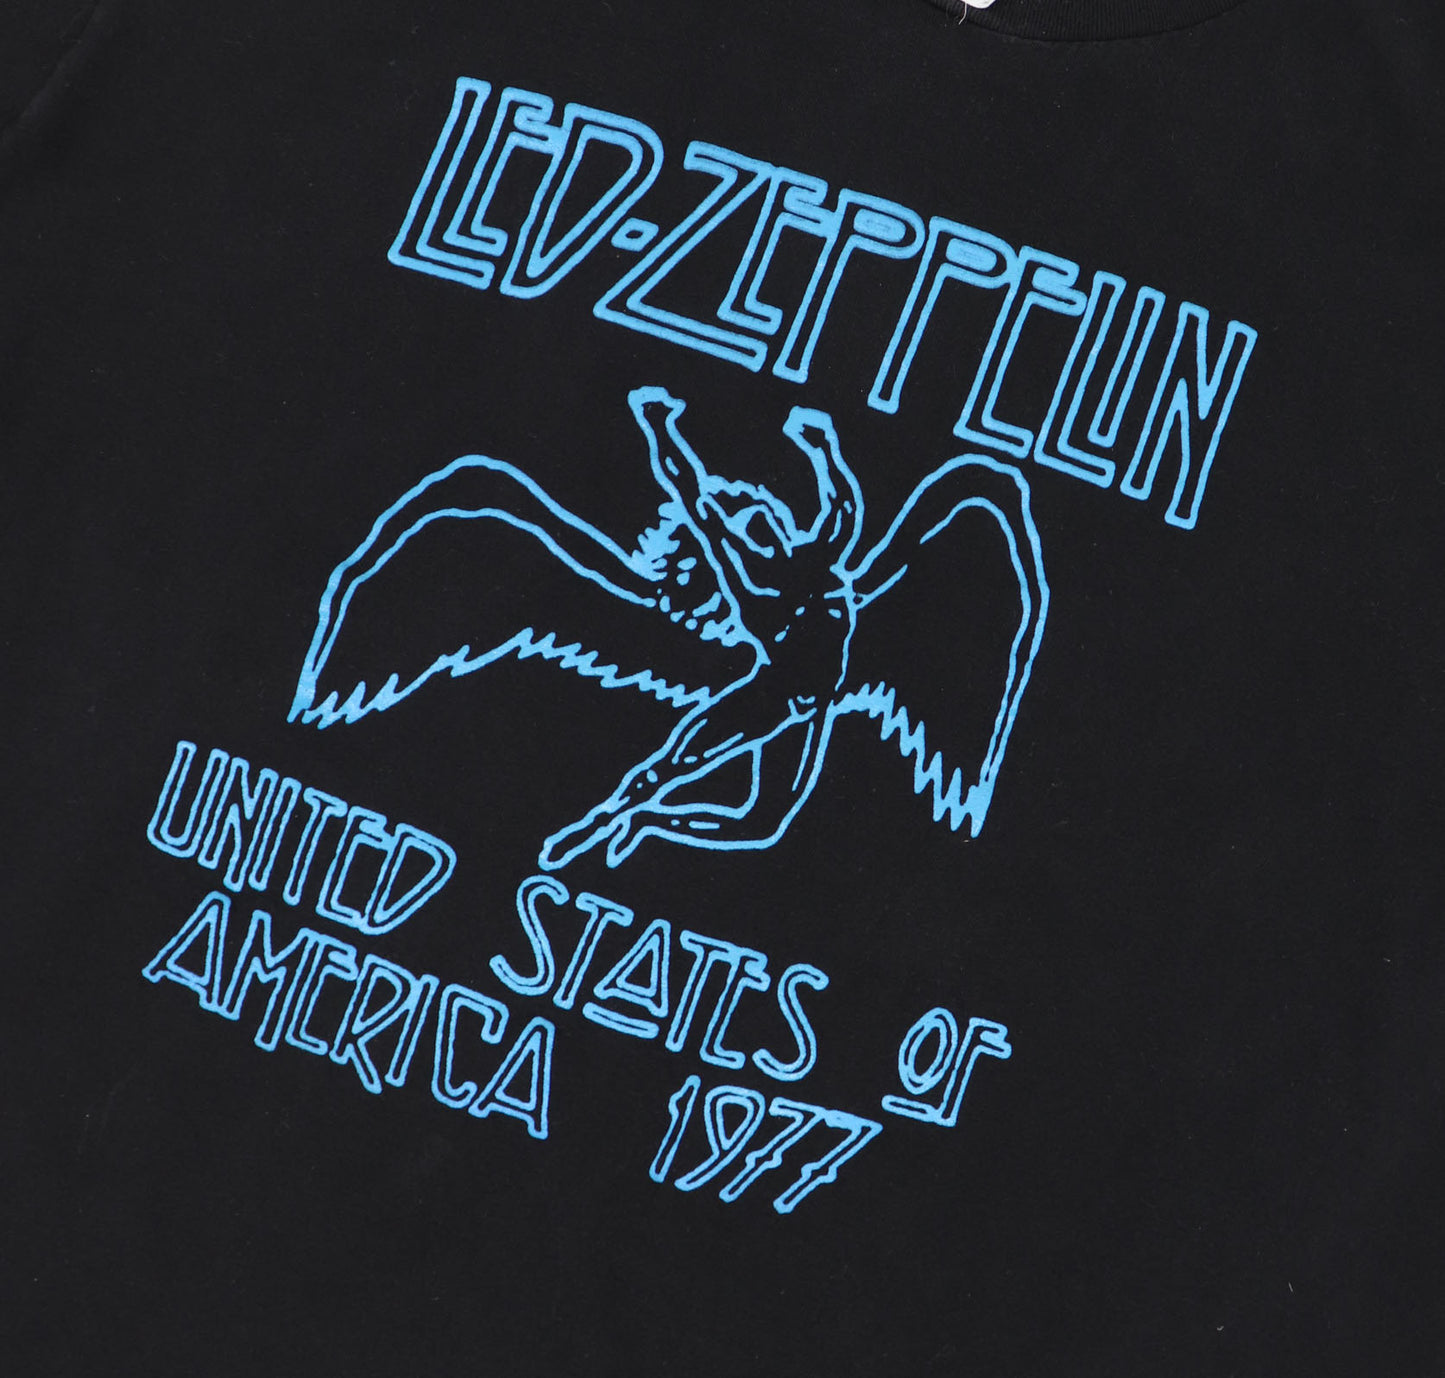 LED ZEPPLIN UNITED STATES OF AMERICA 1977